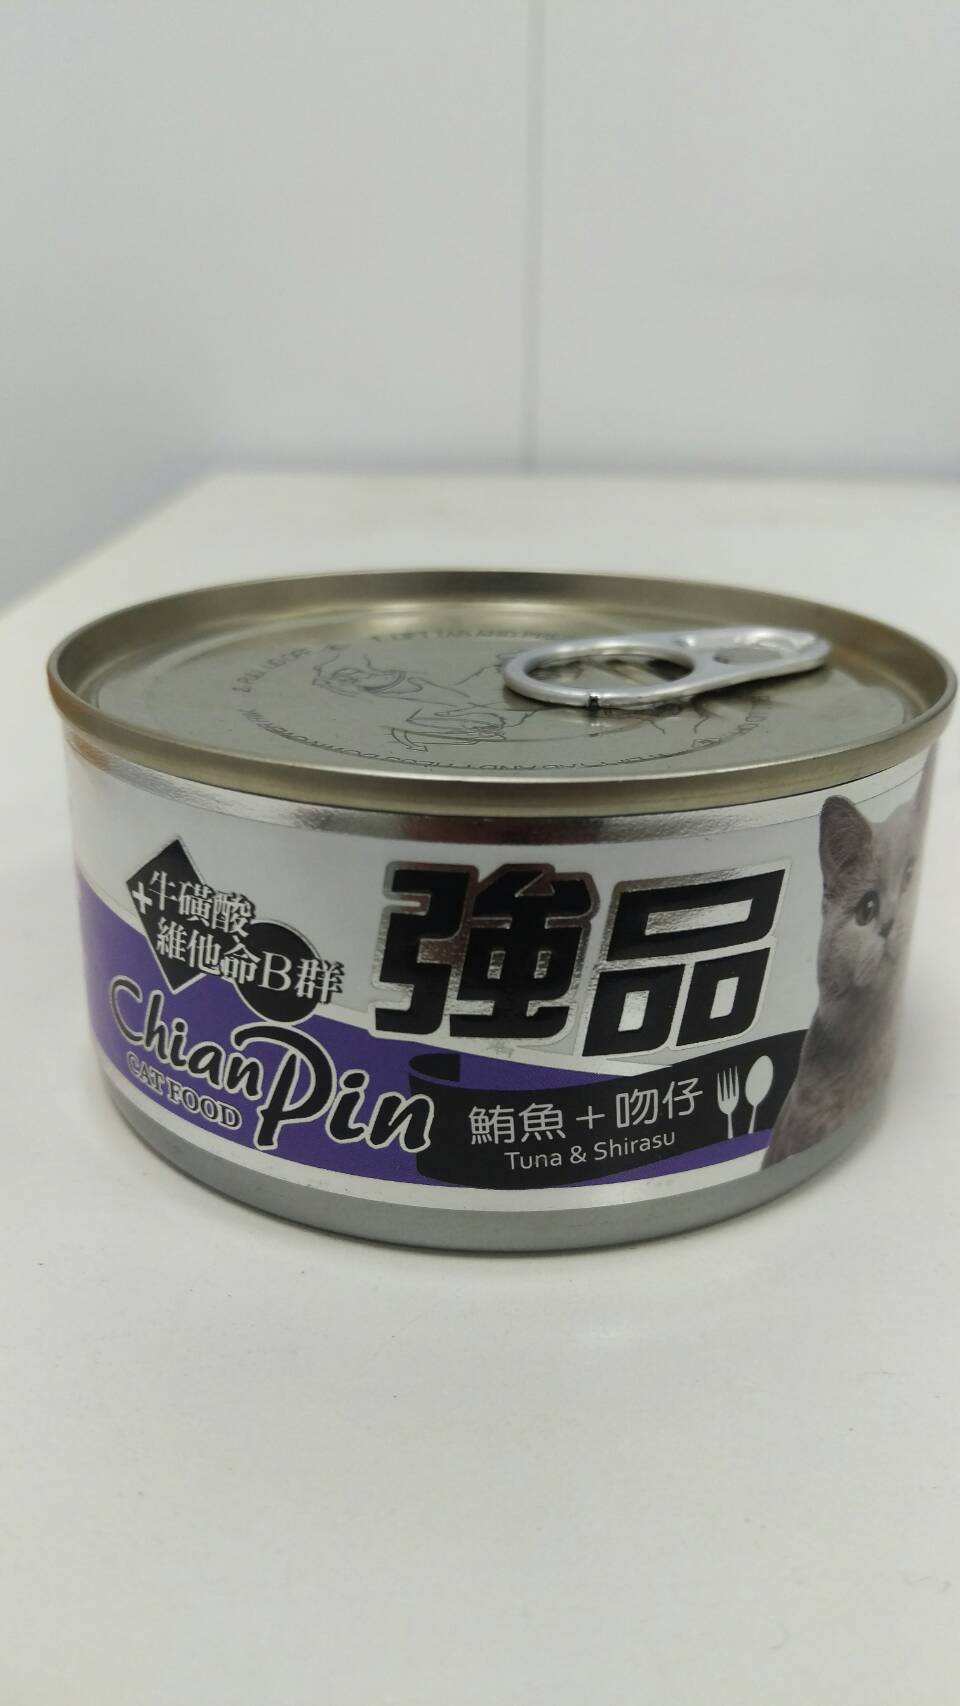 強品貓罐-鮪魚+吻仔
Chian Pin cat can- tuna+shirasu